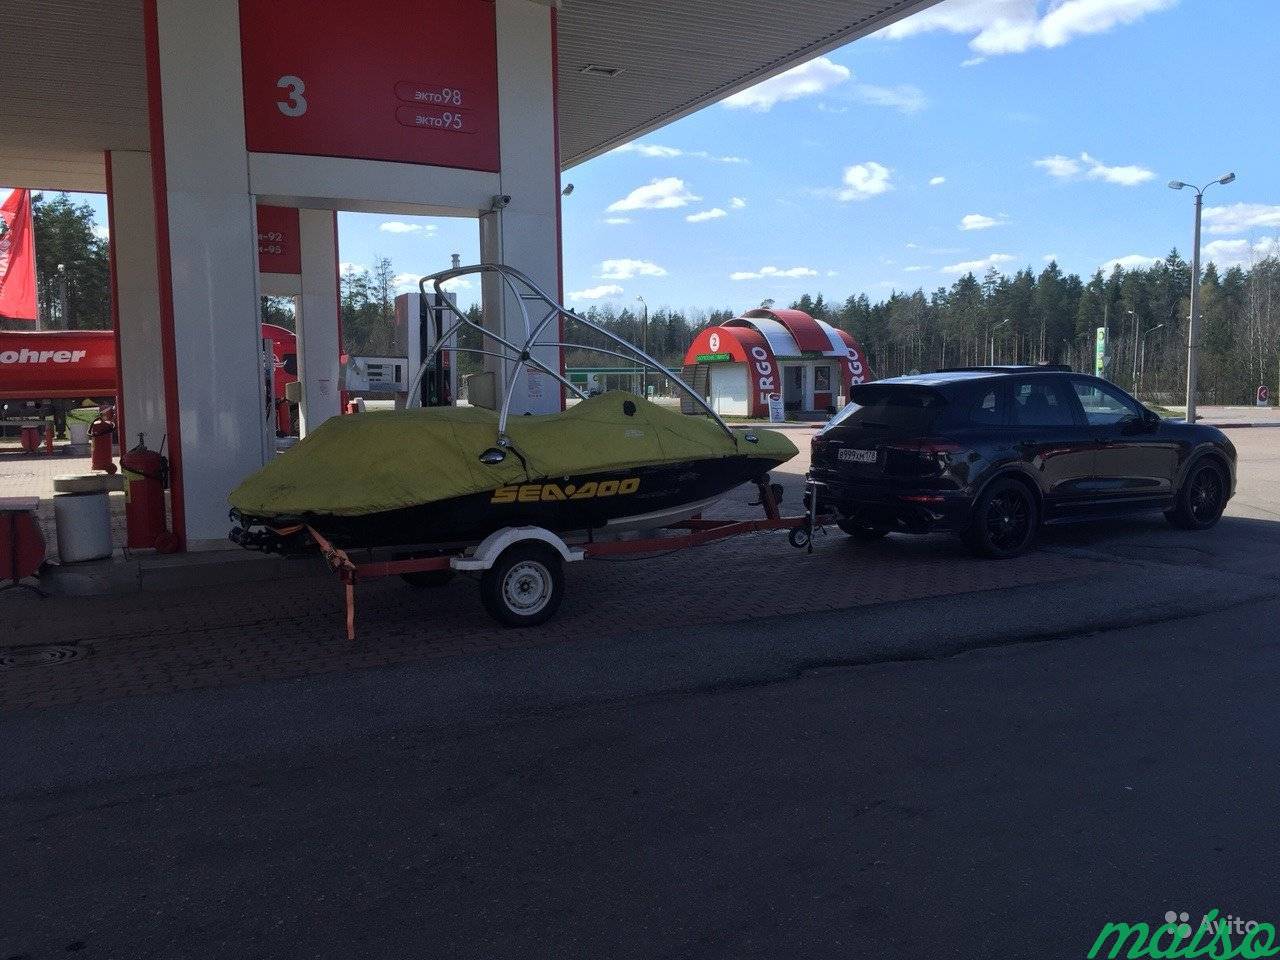 Brp seadoo speedster 215 hp в Санкт-Петербурге. Фото 3